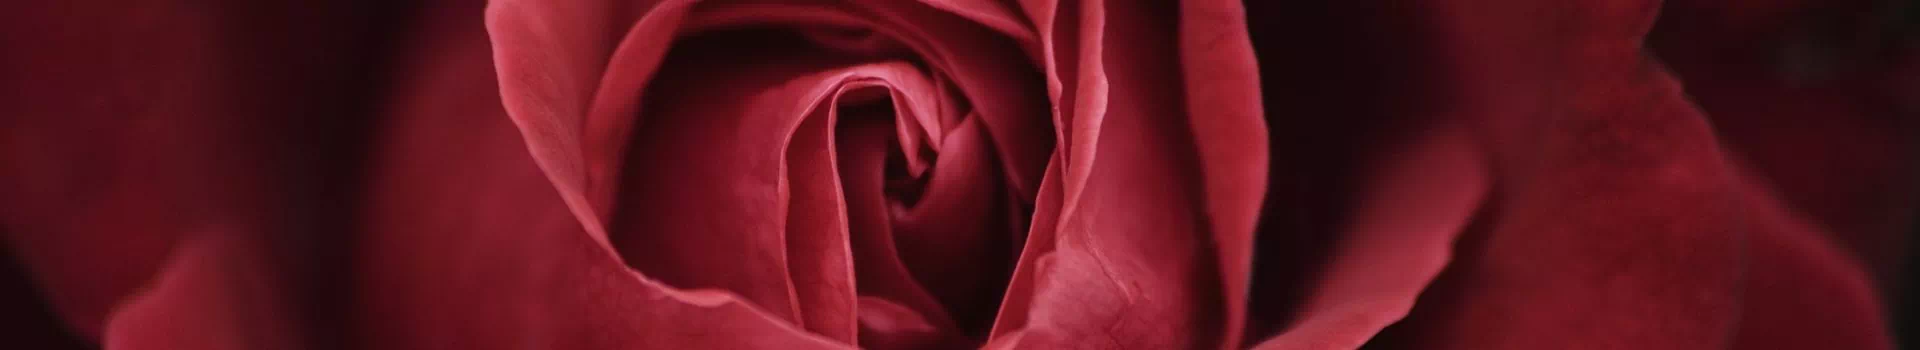 czerwona róża - banner